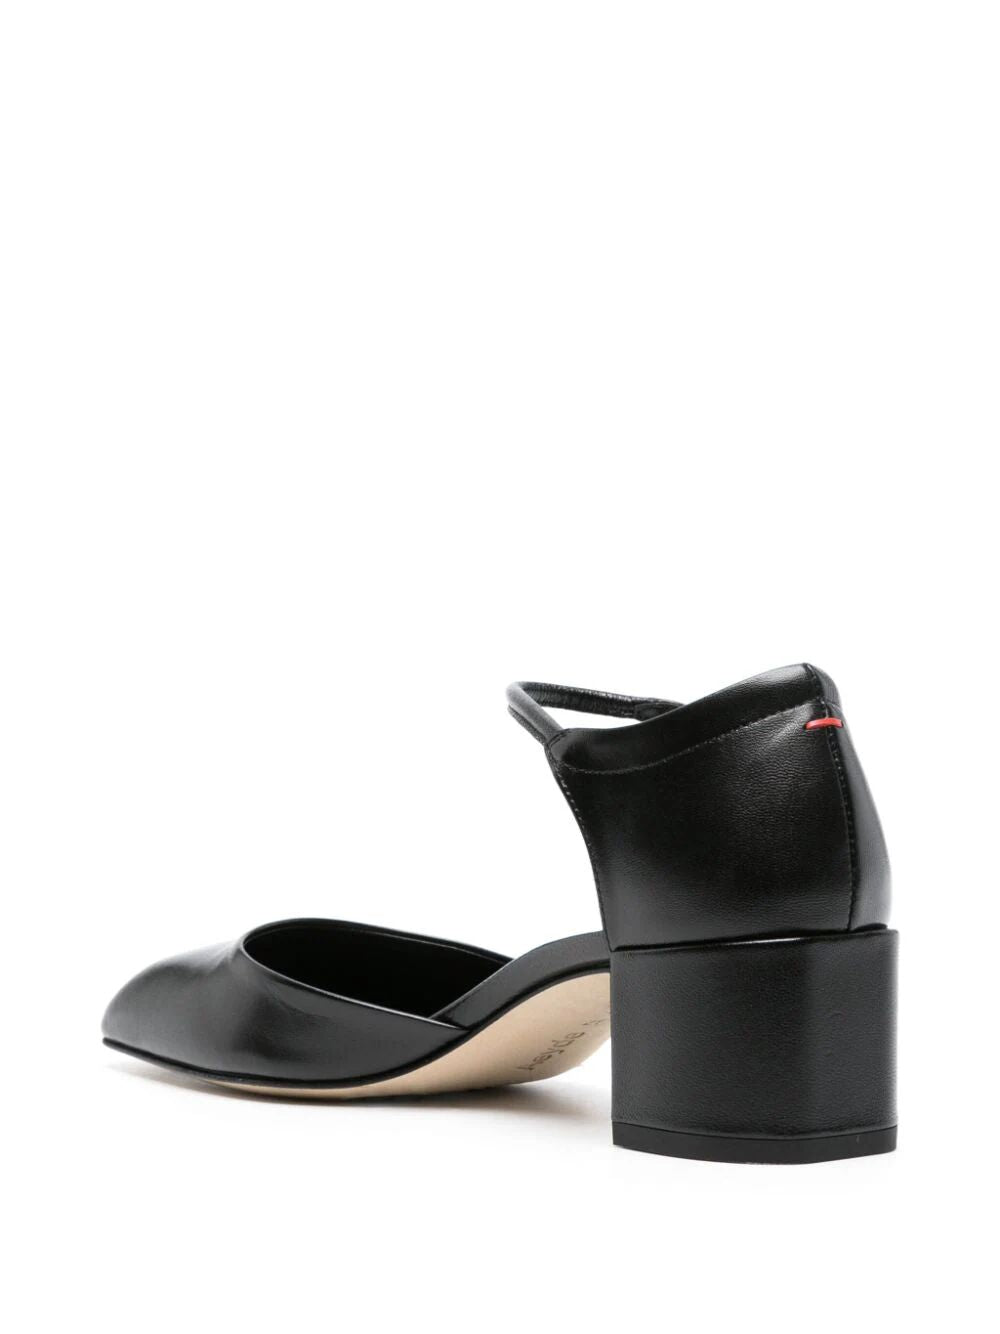 Magda Nappa Leather Black Shoes